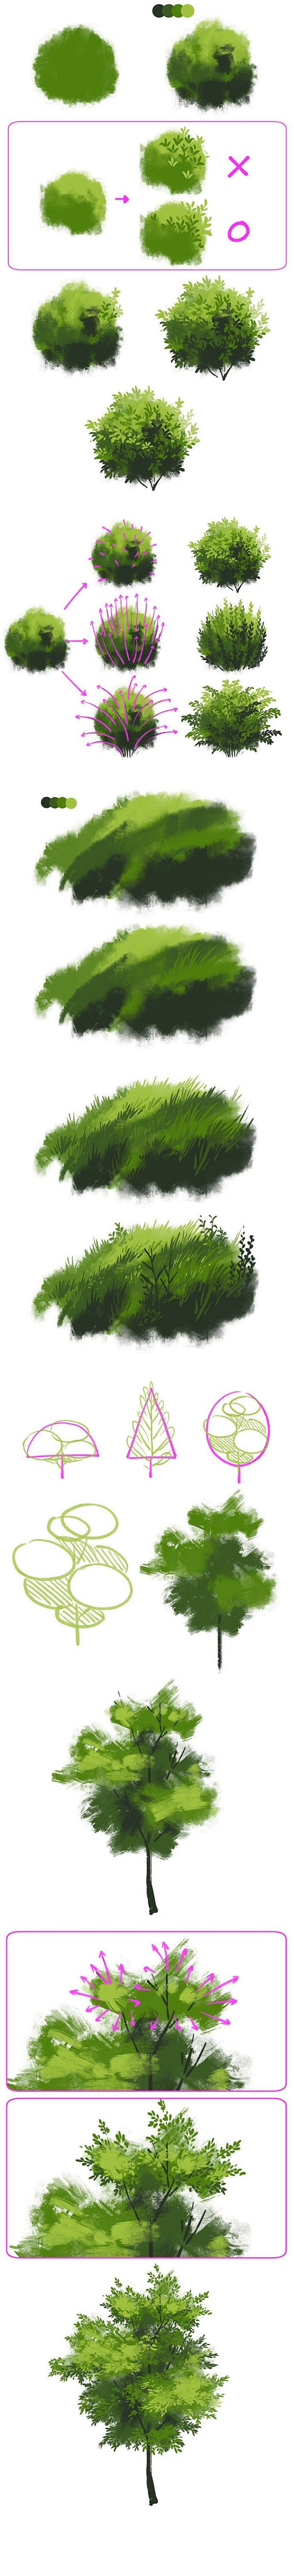 植物画法